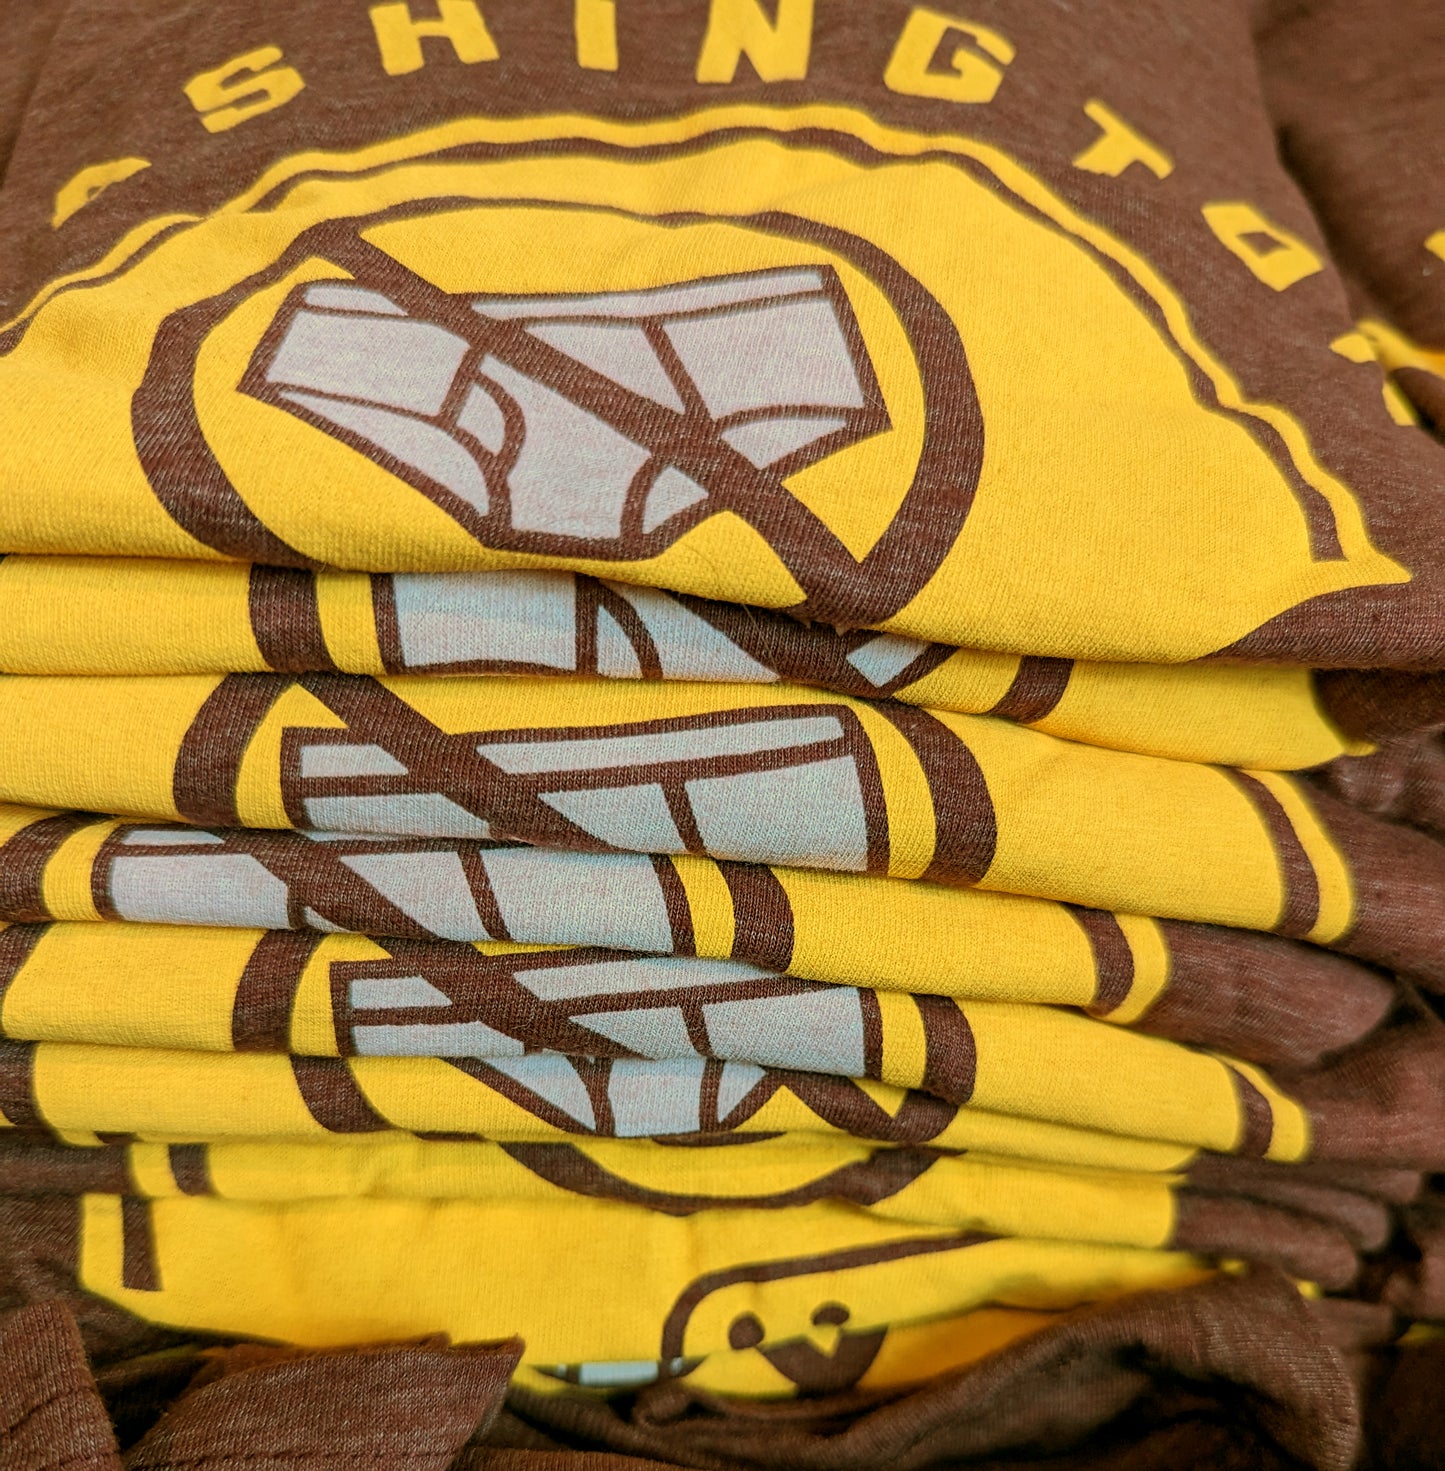 The Washington Going Commandos Football Team T-Shirt